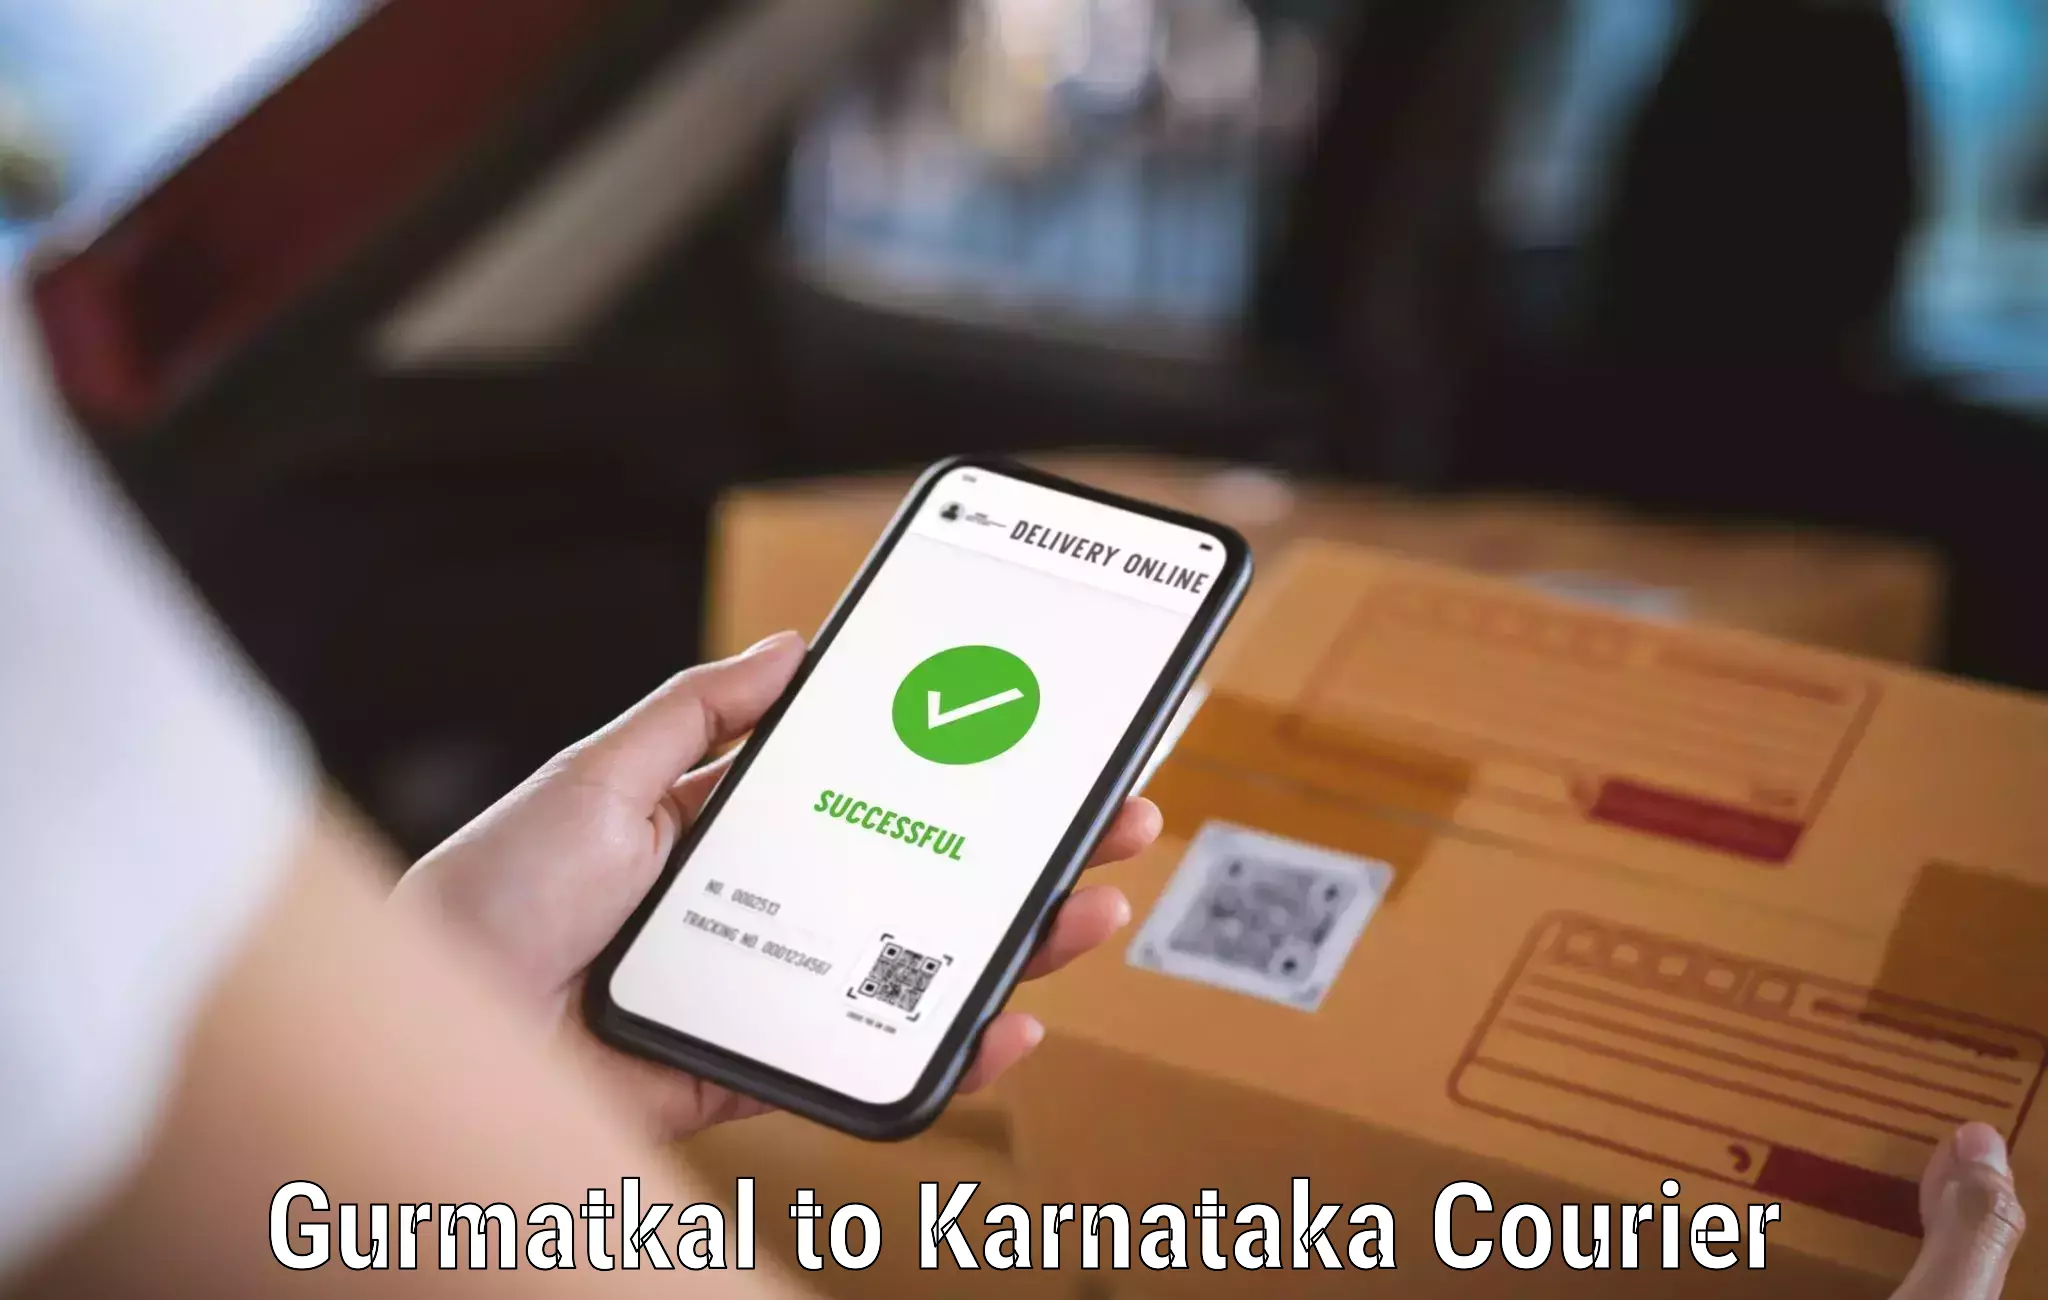 Courier service comparison Gurmatkal to Kudligi